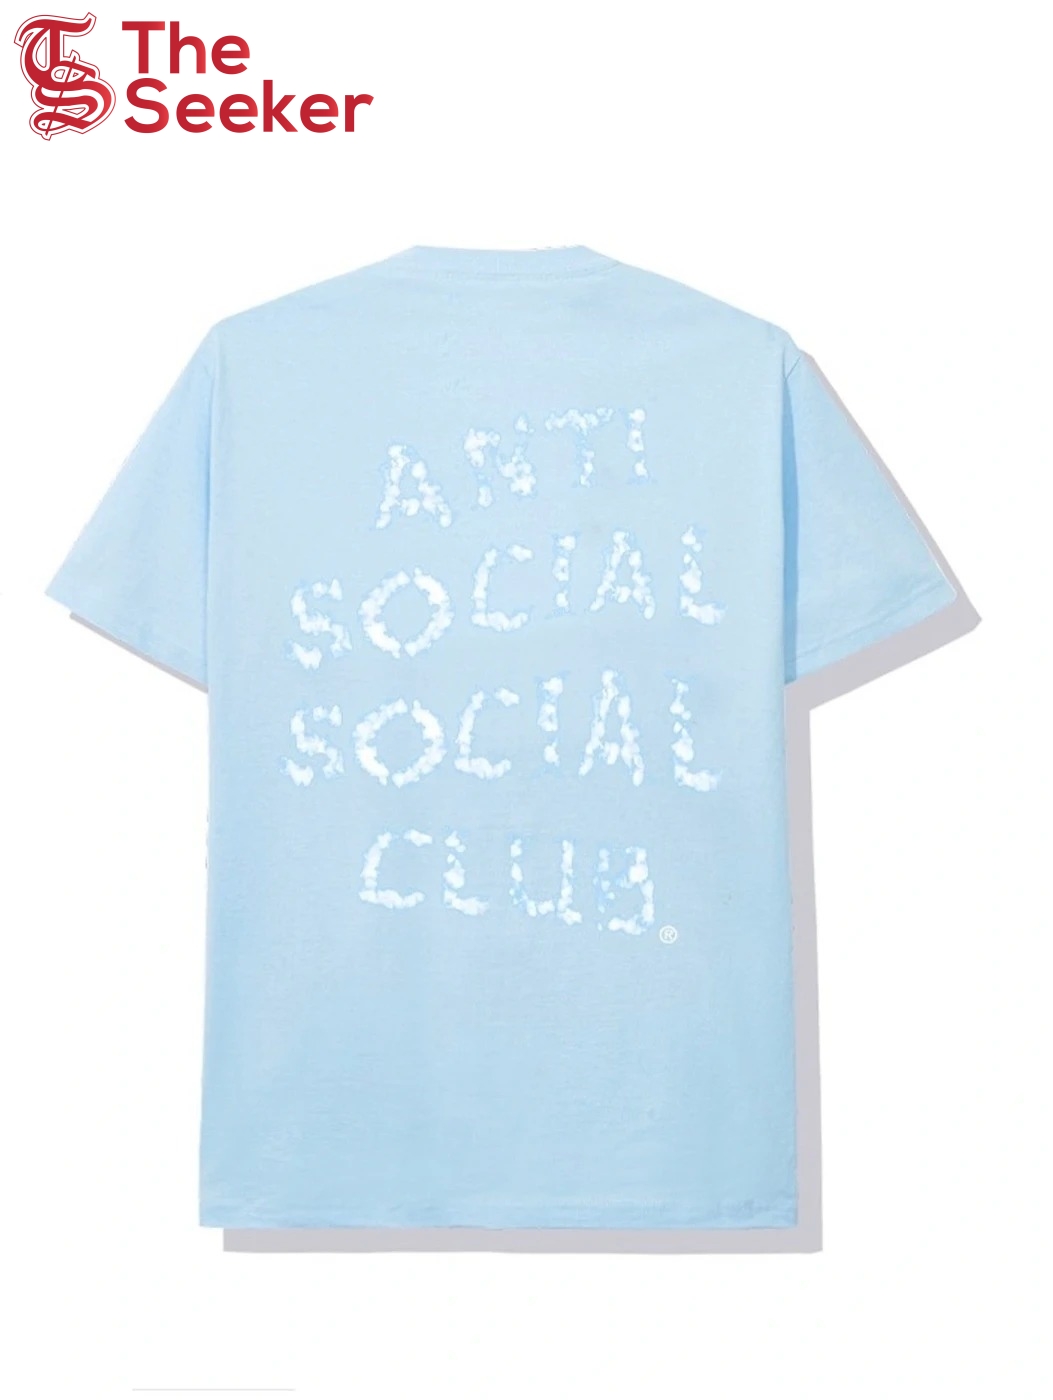 Anti Social Social Club Partly Cloudy T-shirt Blue